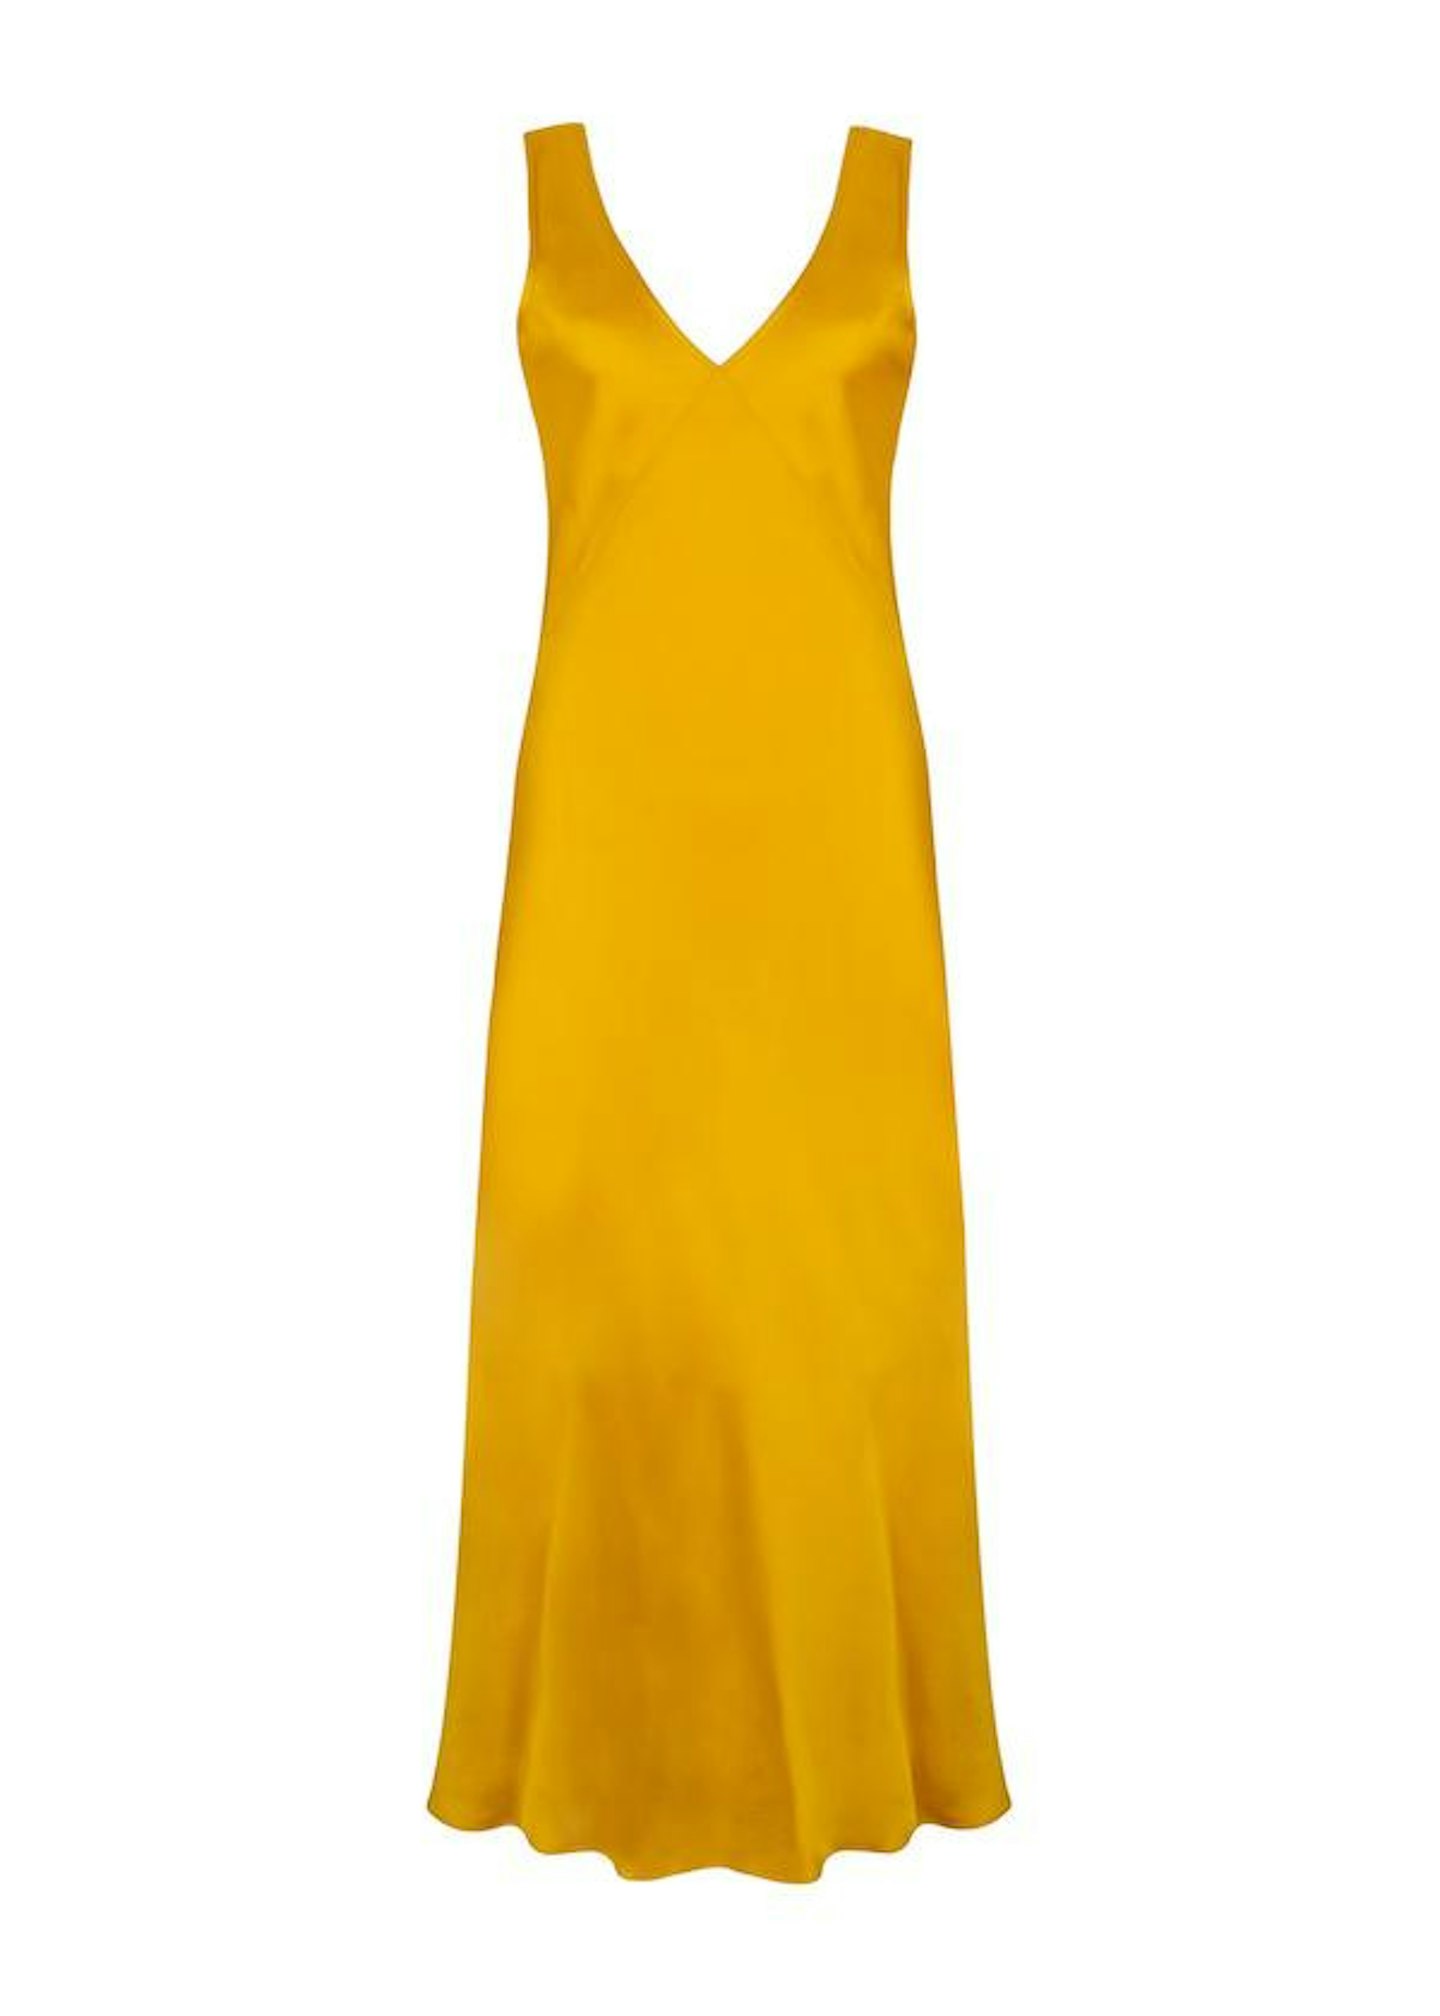 Asceno, Mimosa Silk Slip Dress, £365